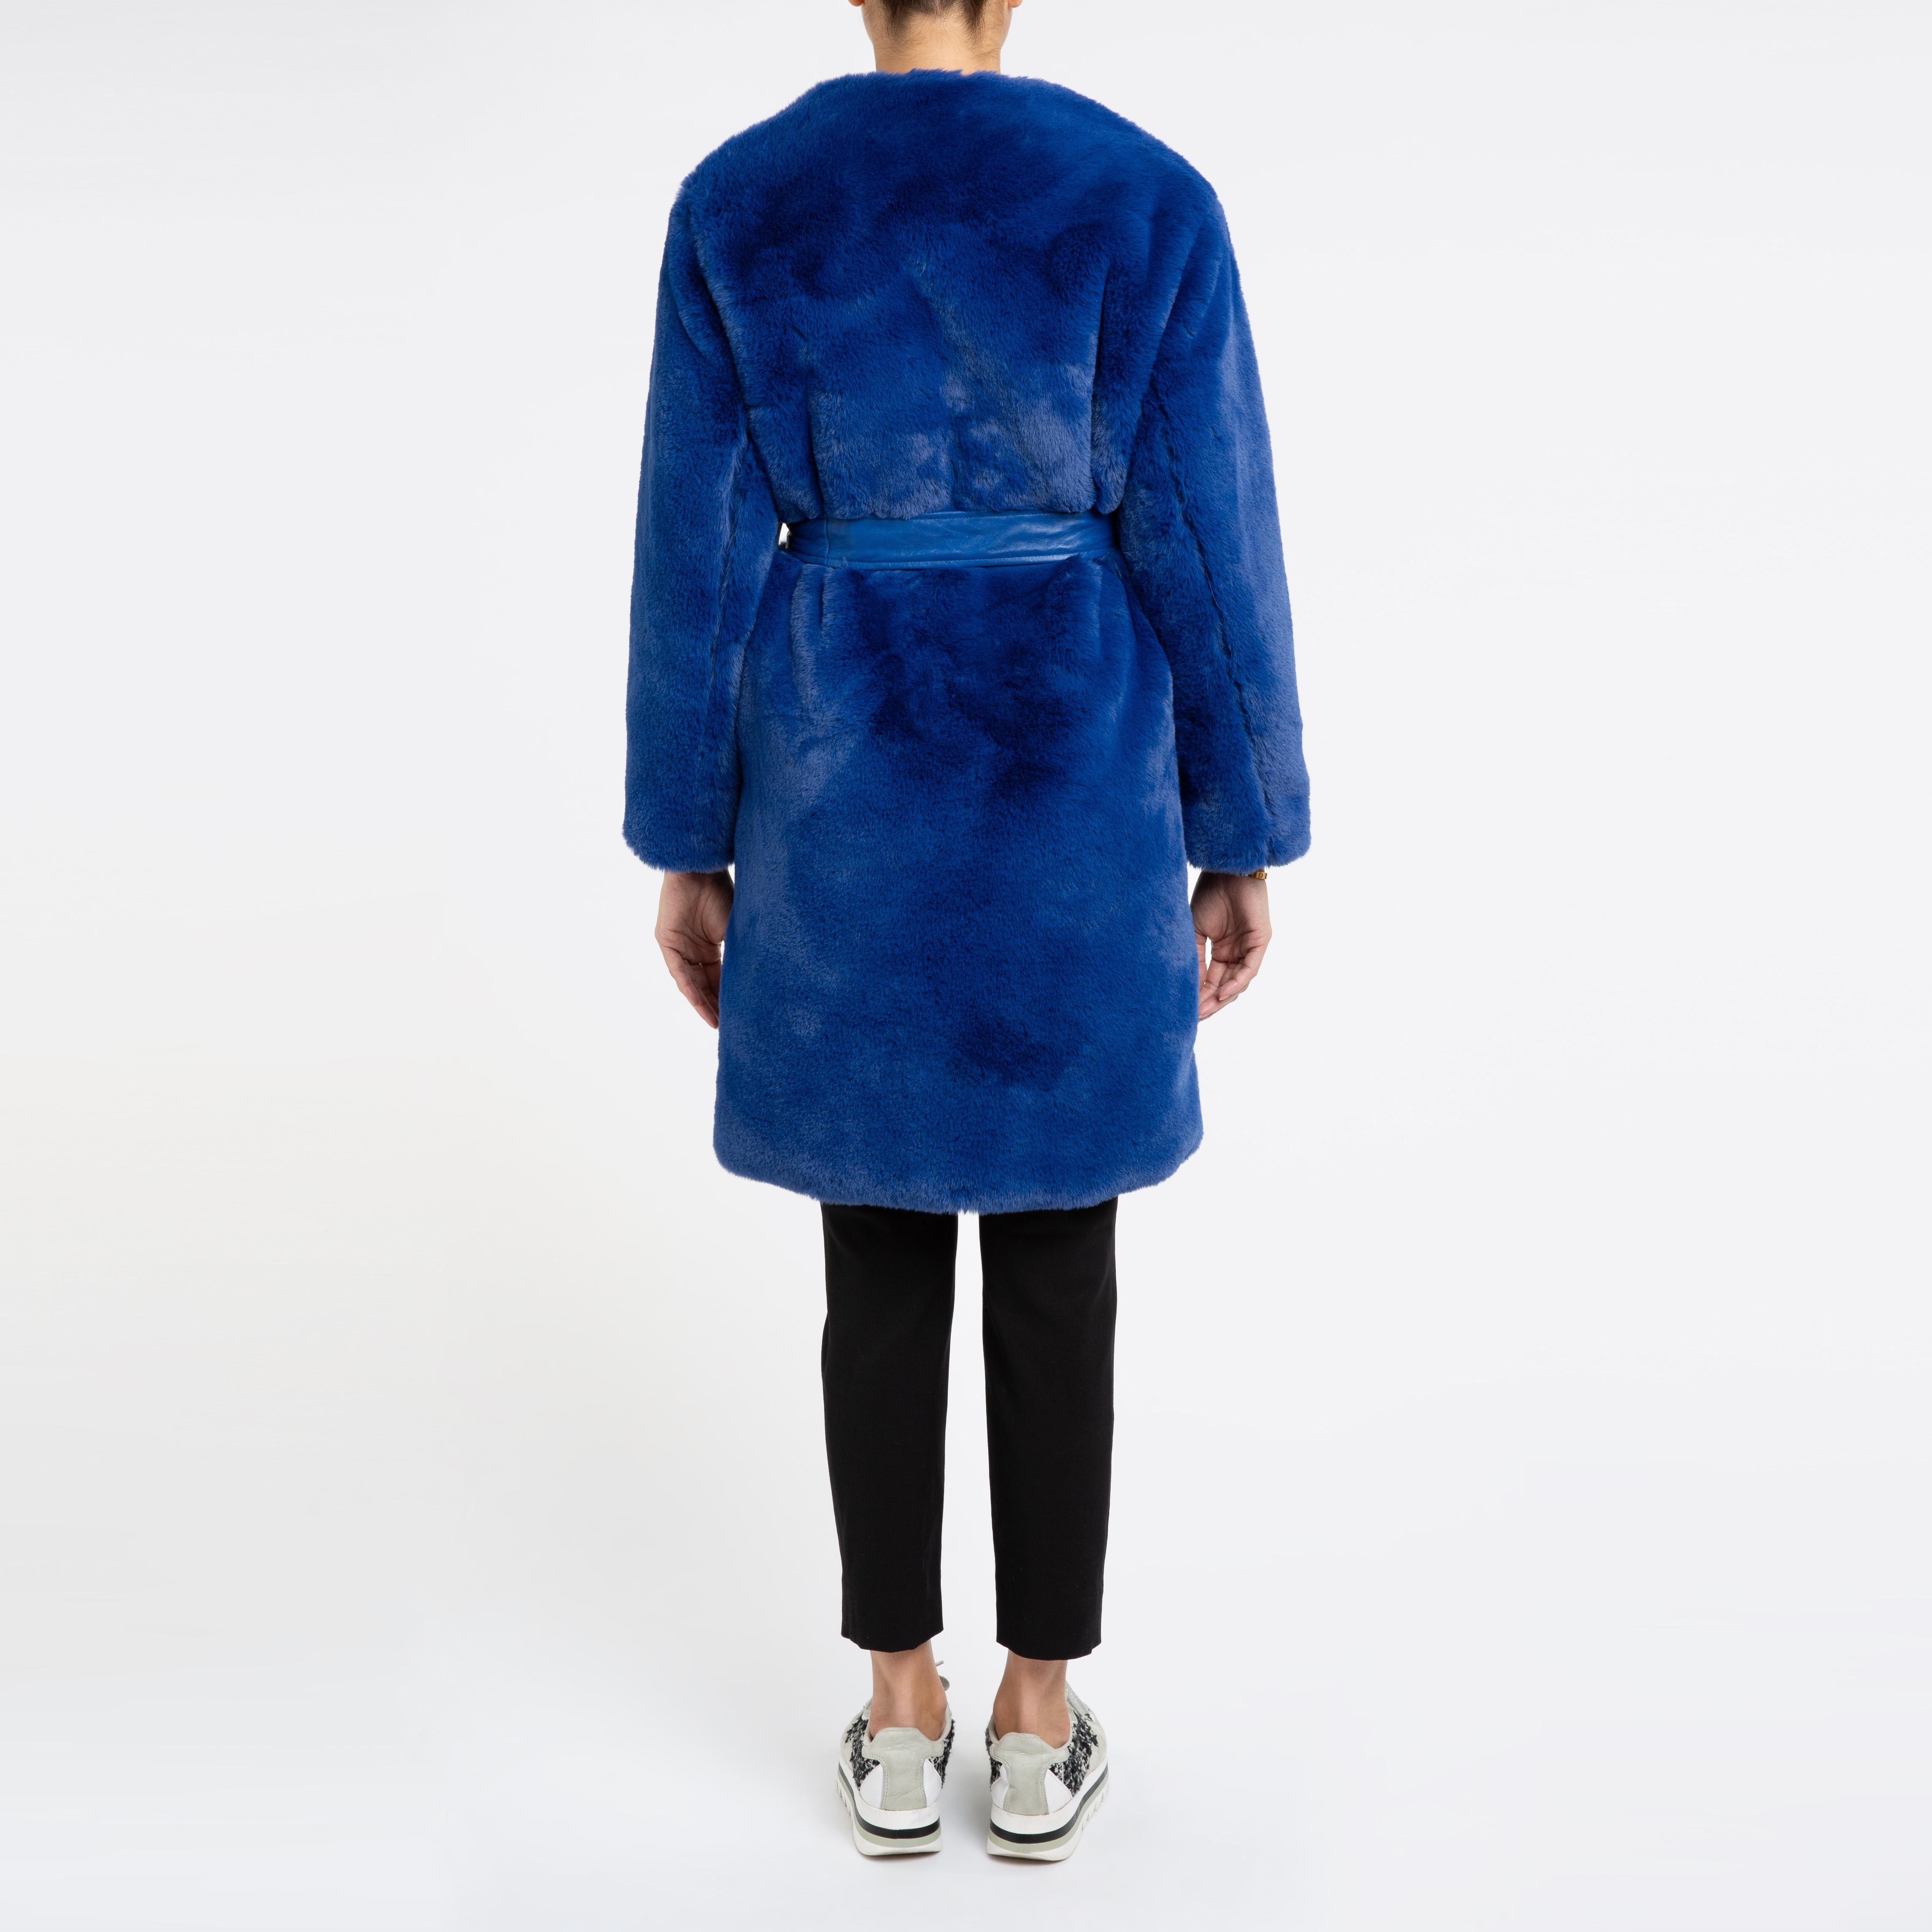 Verheyen London Serena  Collarless Faux Fur Coat in Blue - Size uk 10 For Sale 5